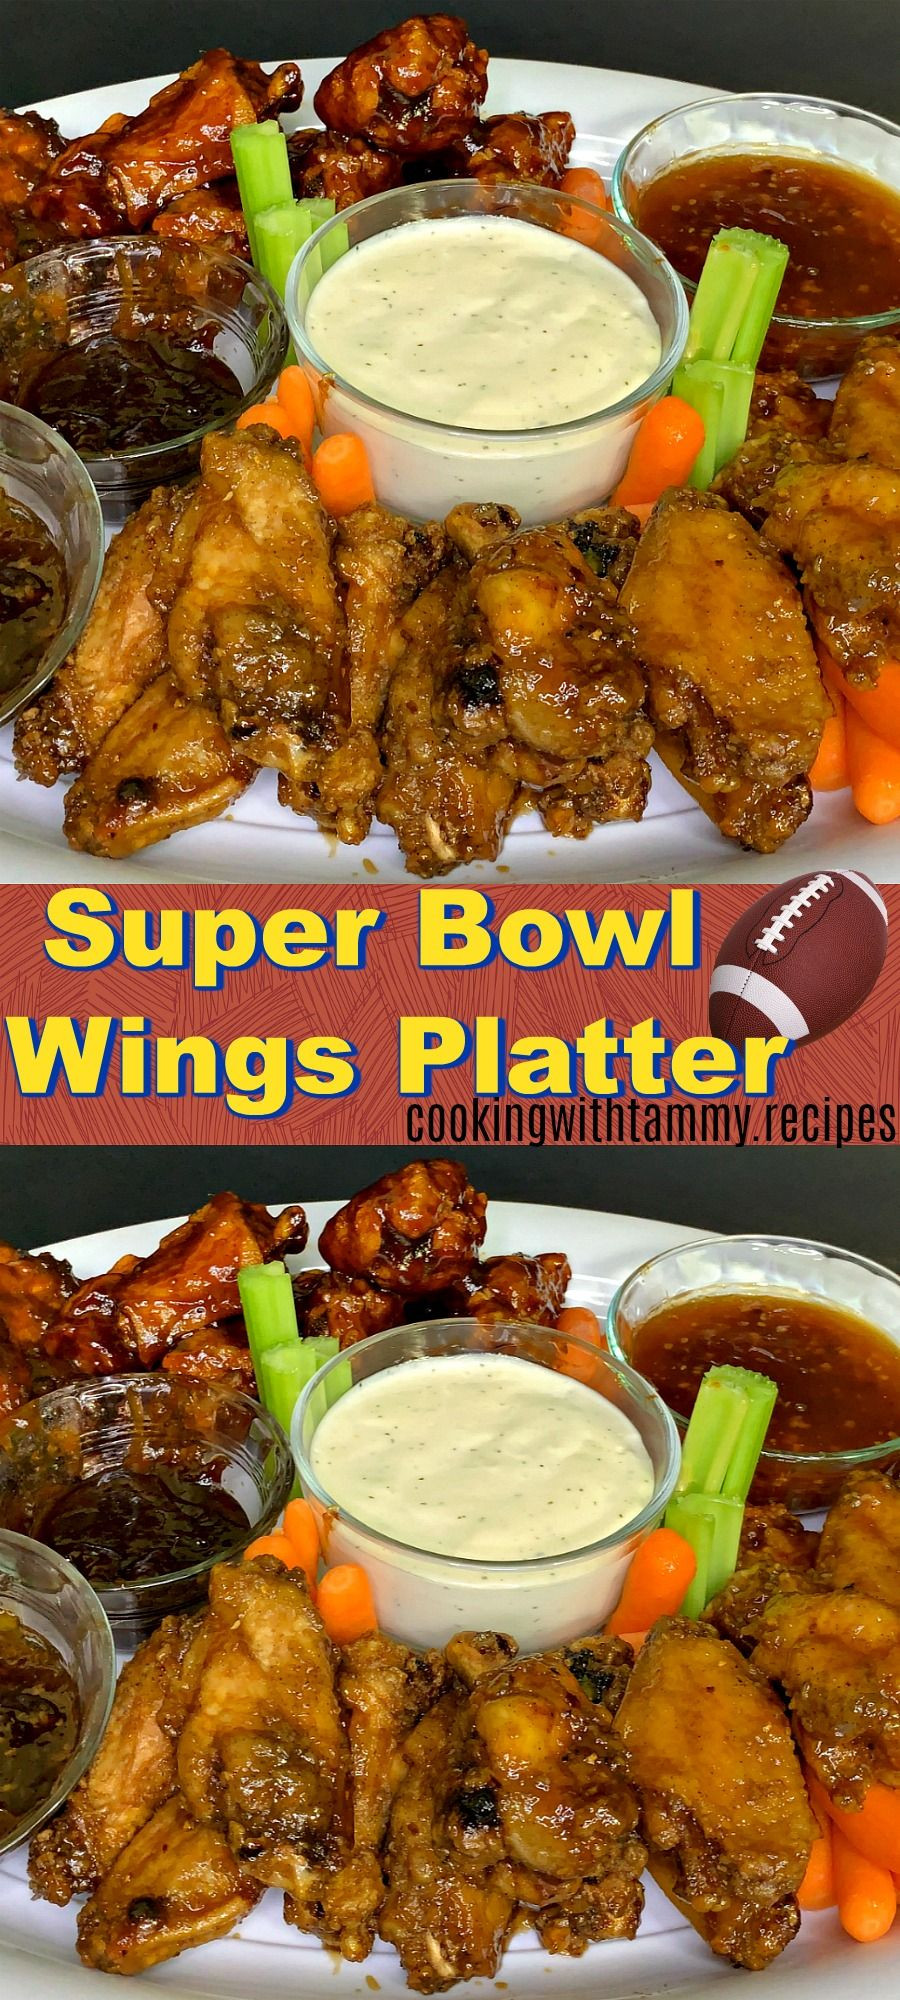 Super Bowl Chicken Wing Recipes
 Super Bowl Chicken Wings Recipe Appetizer A bination